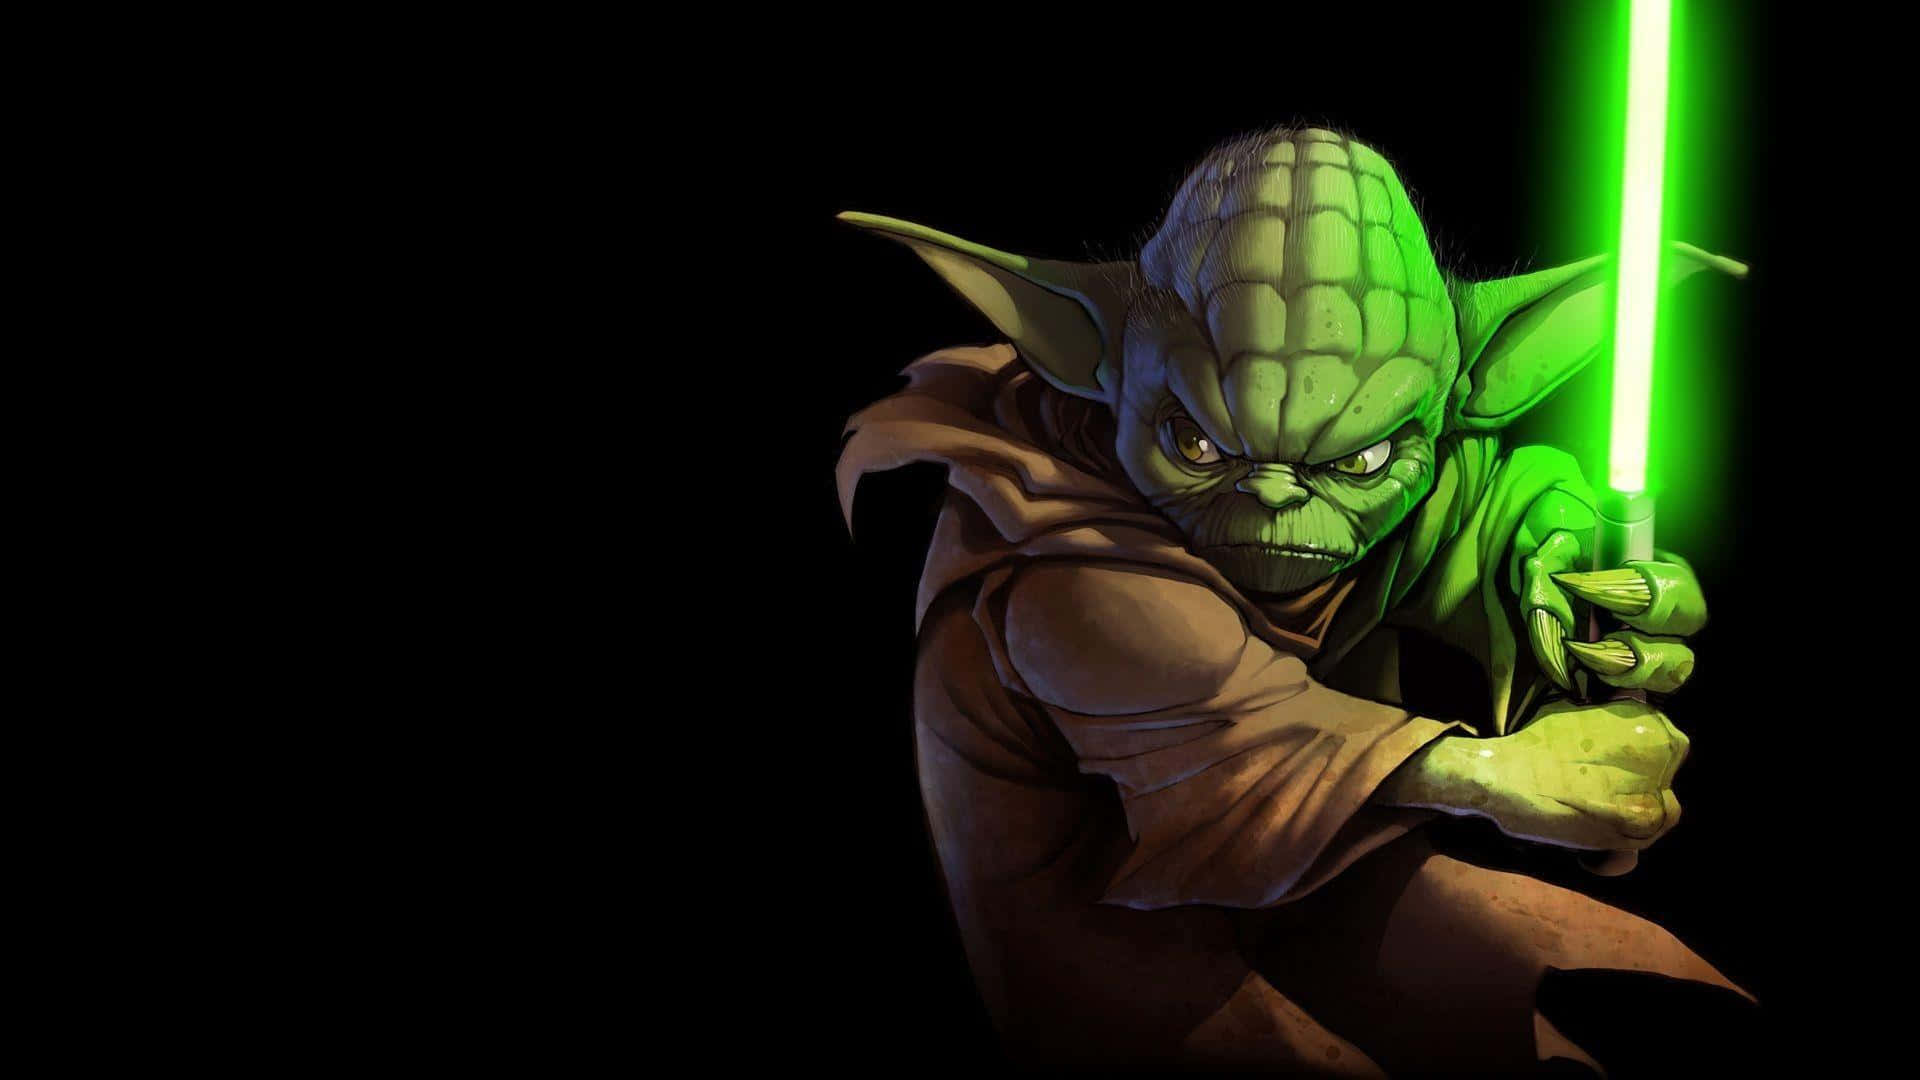 Photo  "The Grand Master Yoda, leader of the Jedi Order"